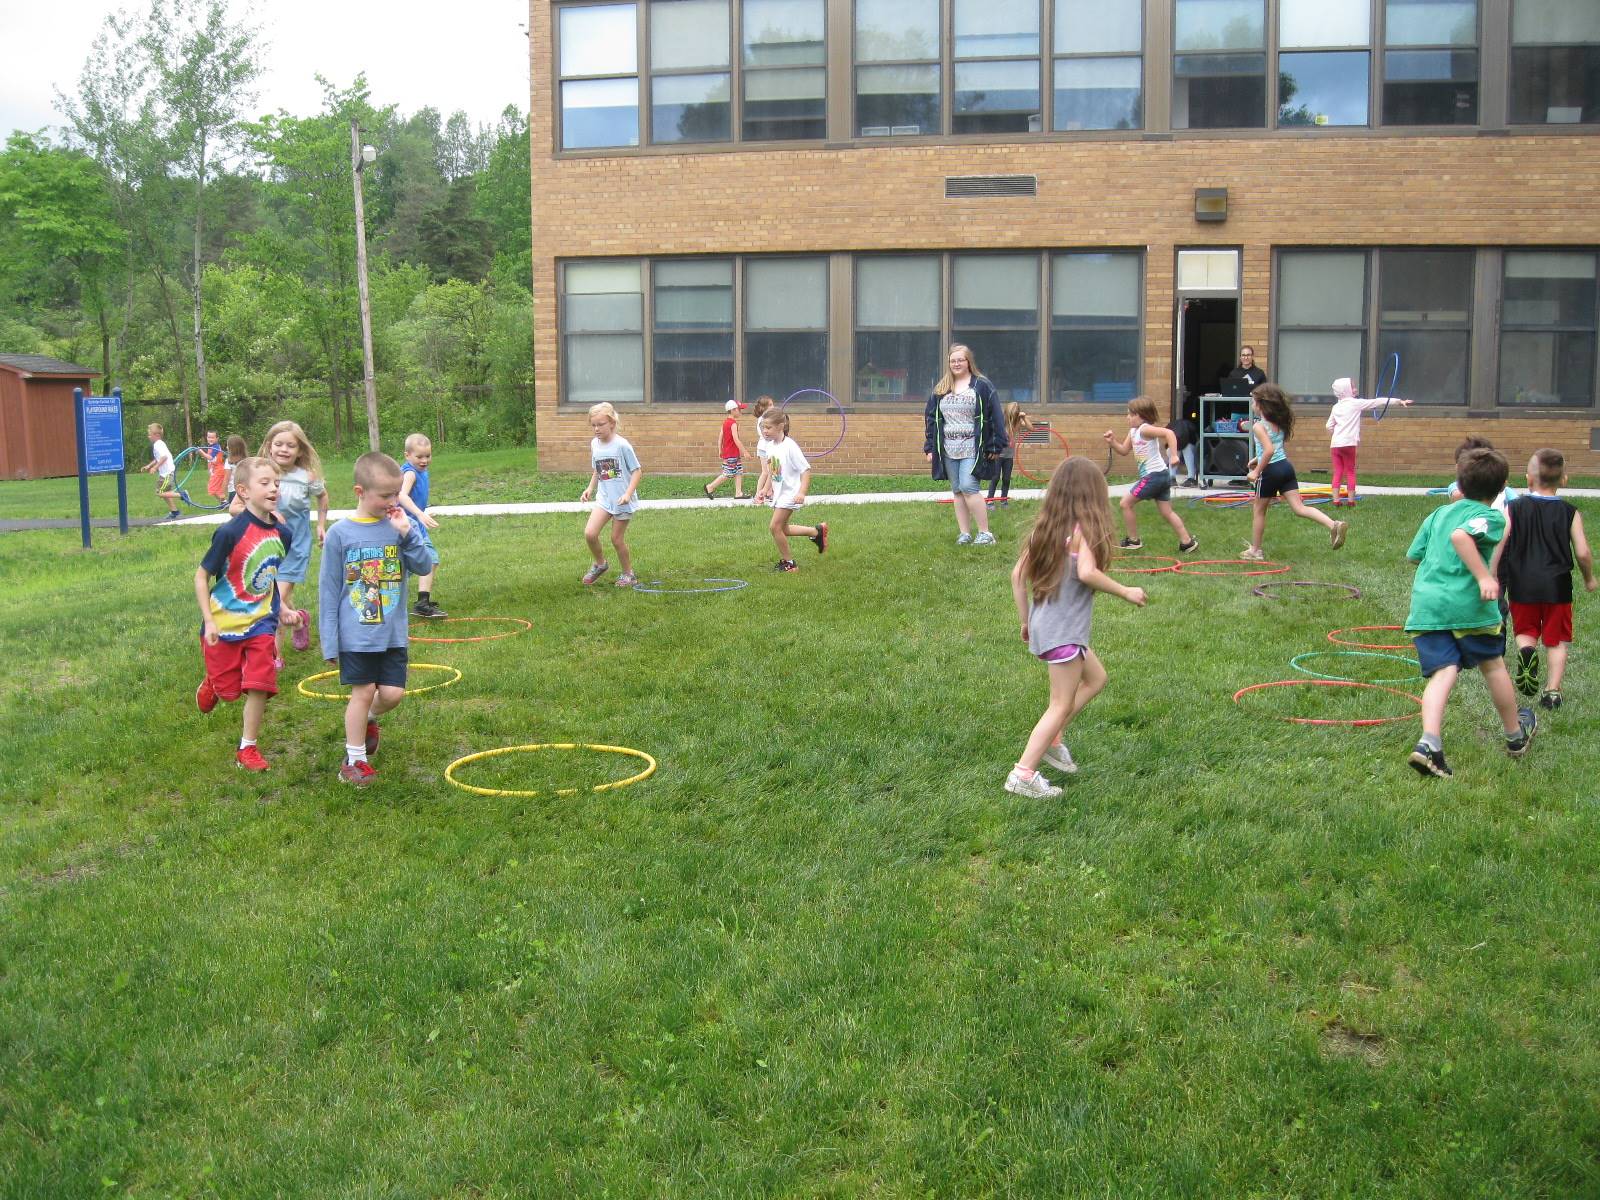 Student group playing hula hoop.